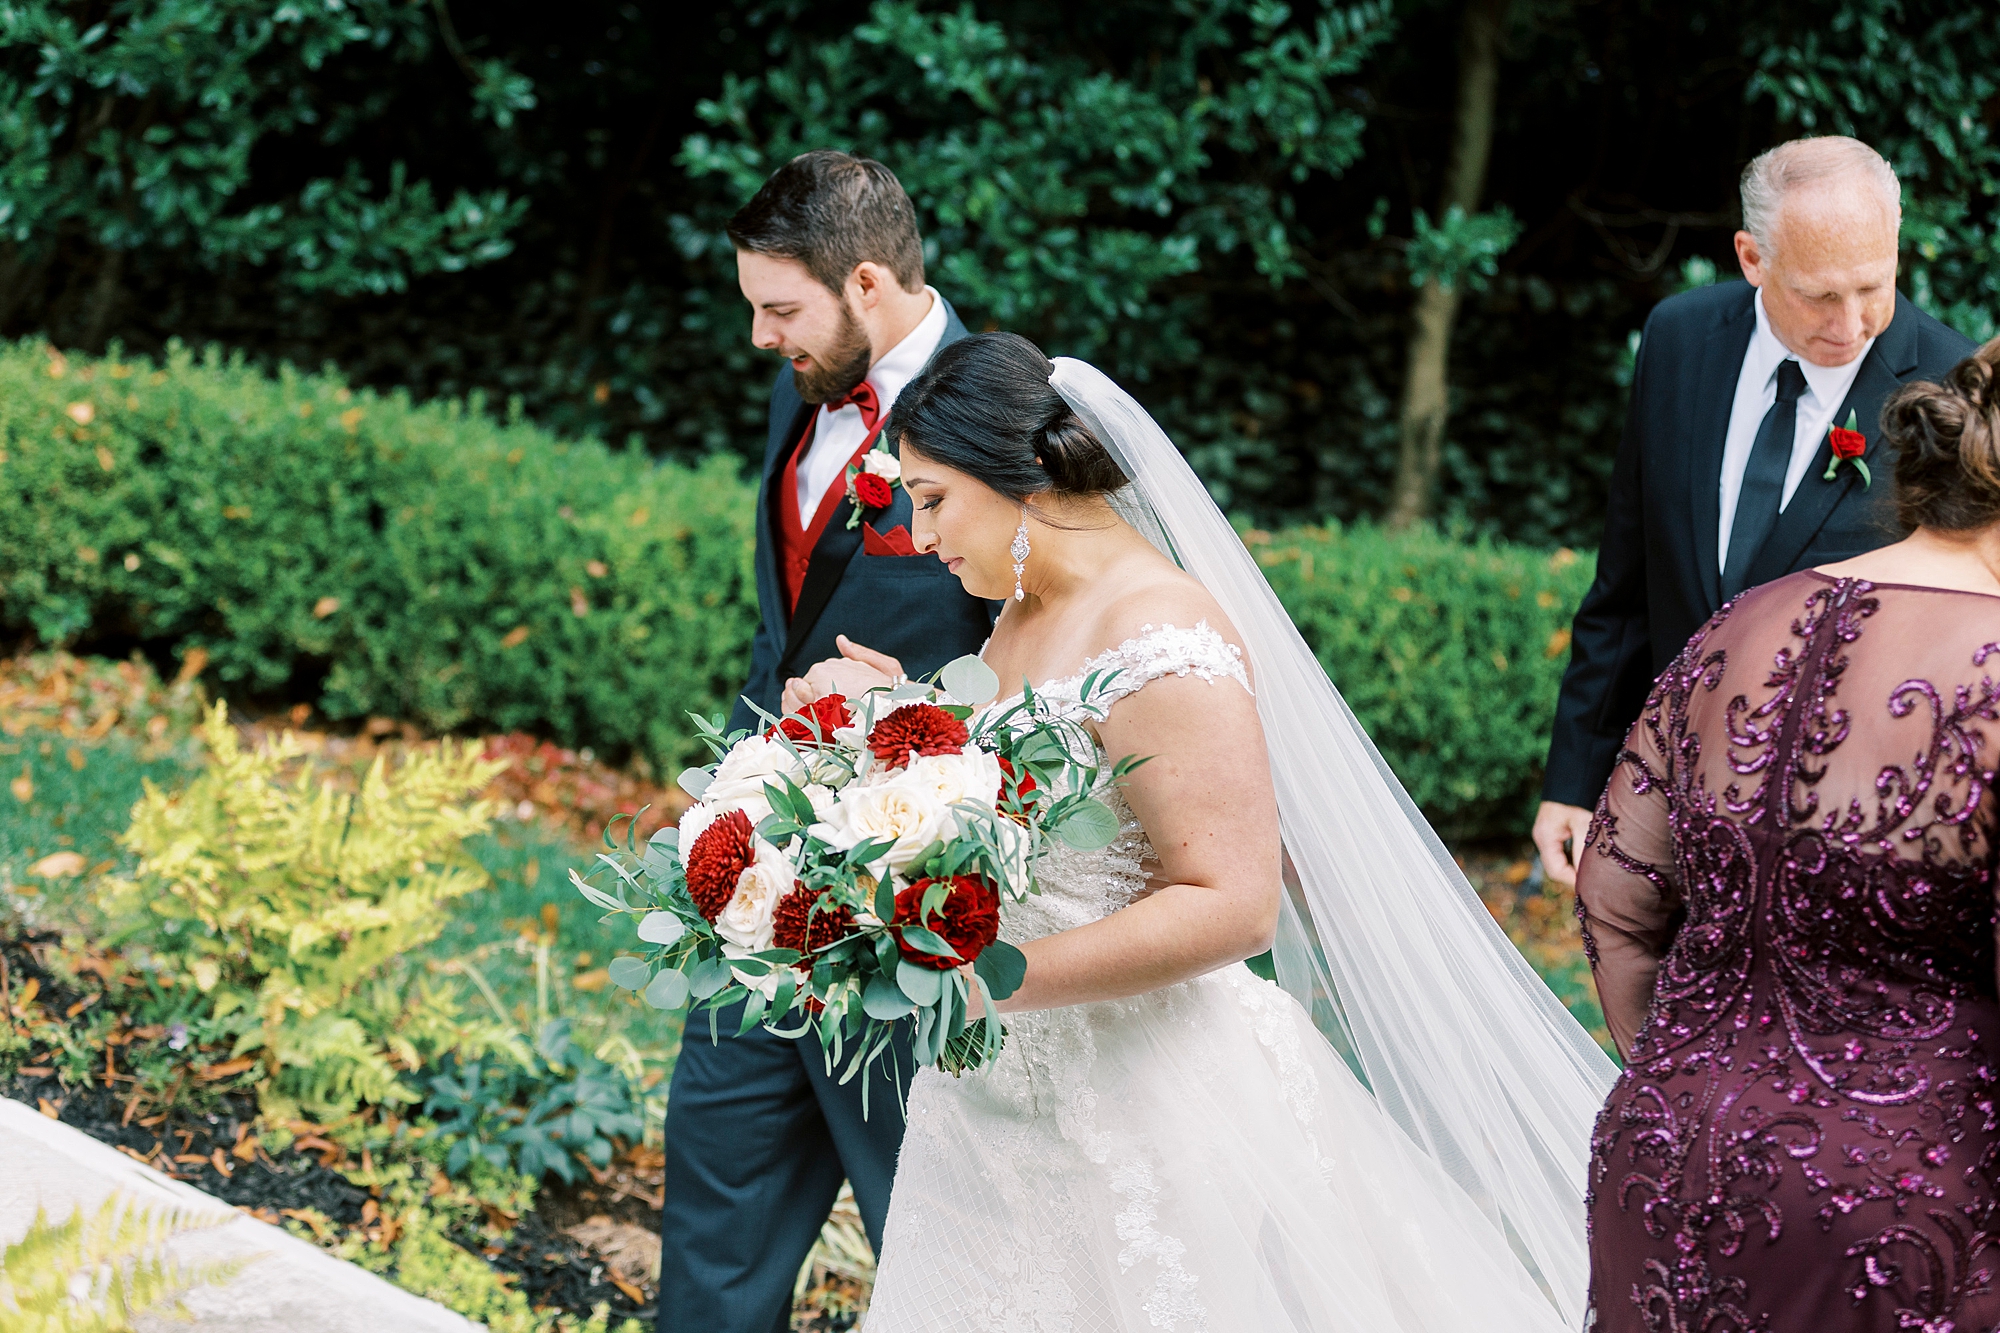 bride and groom walk up steps for outdoor wedding ceremony at Separk Mansion